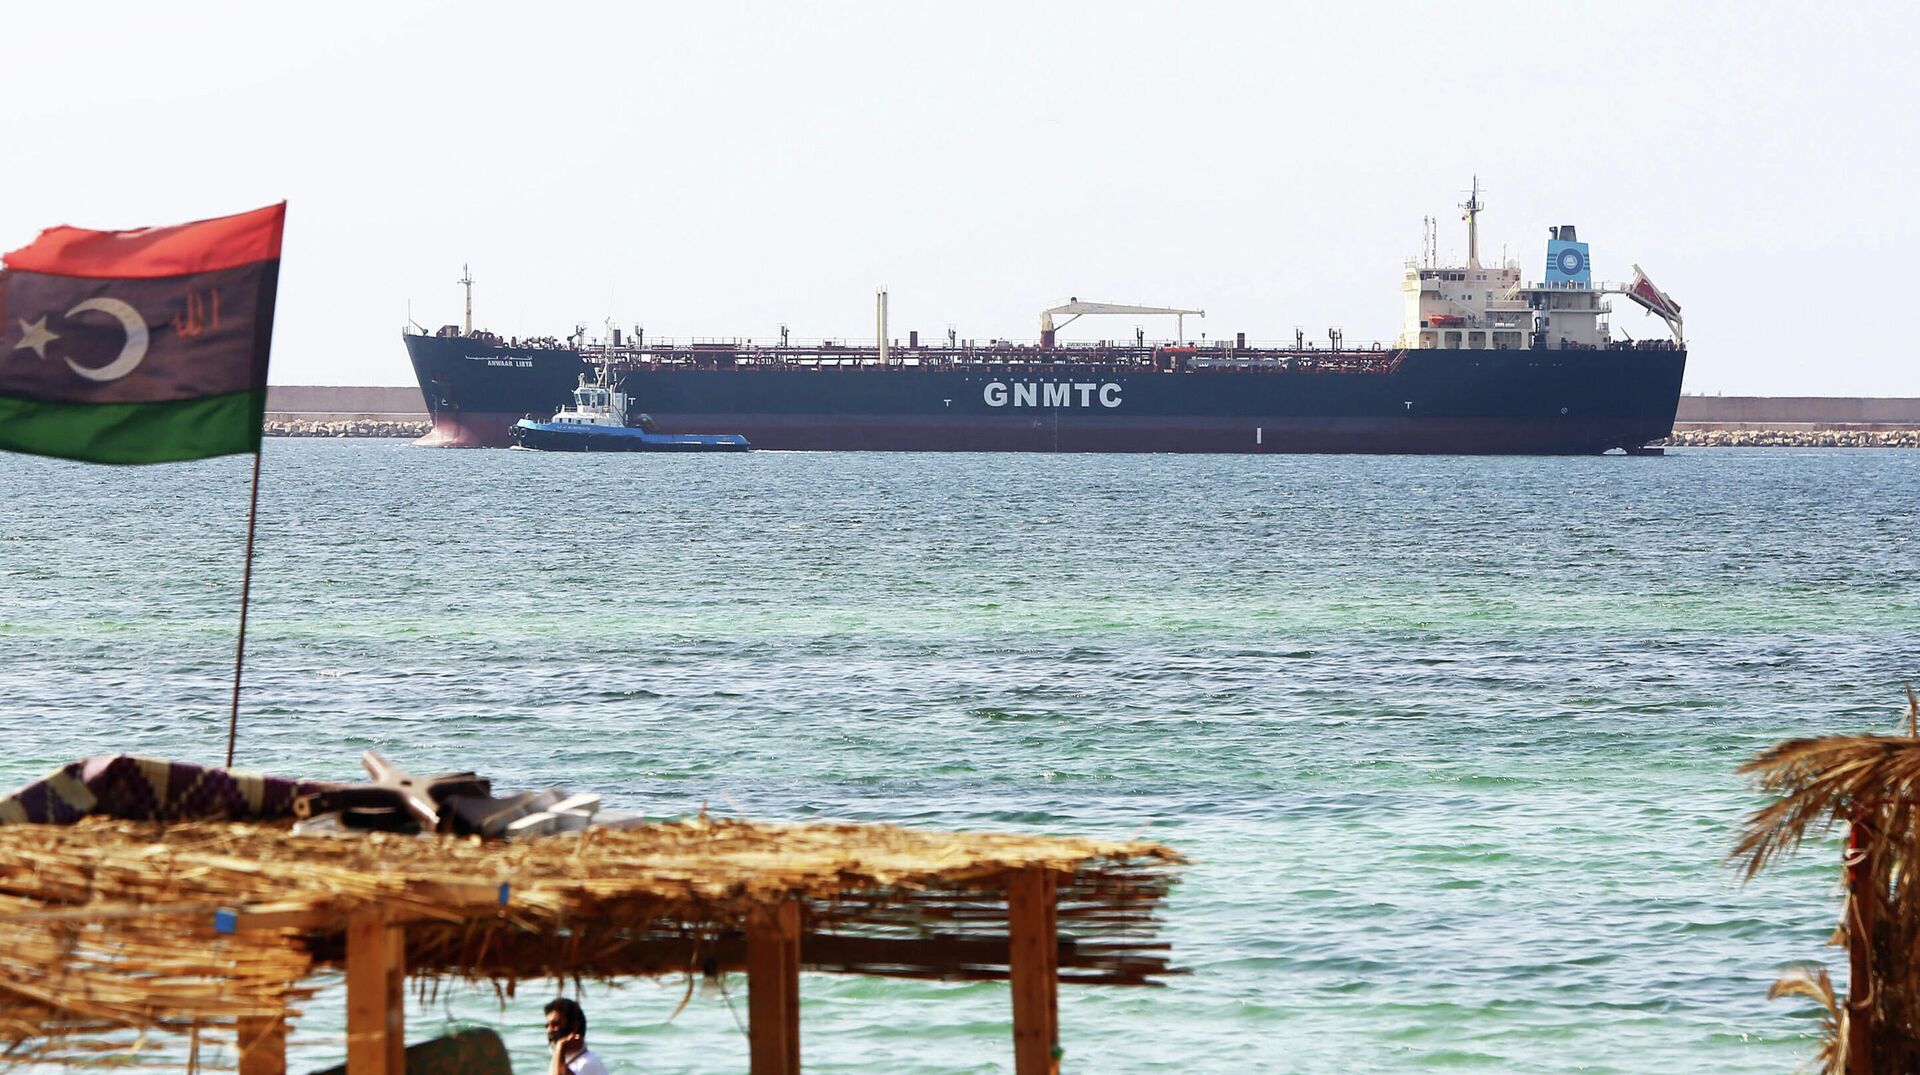 Нефтяной танкер Анвар Ливия в порту Триполи - РИА Новости, 1920, 24.09.2020